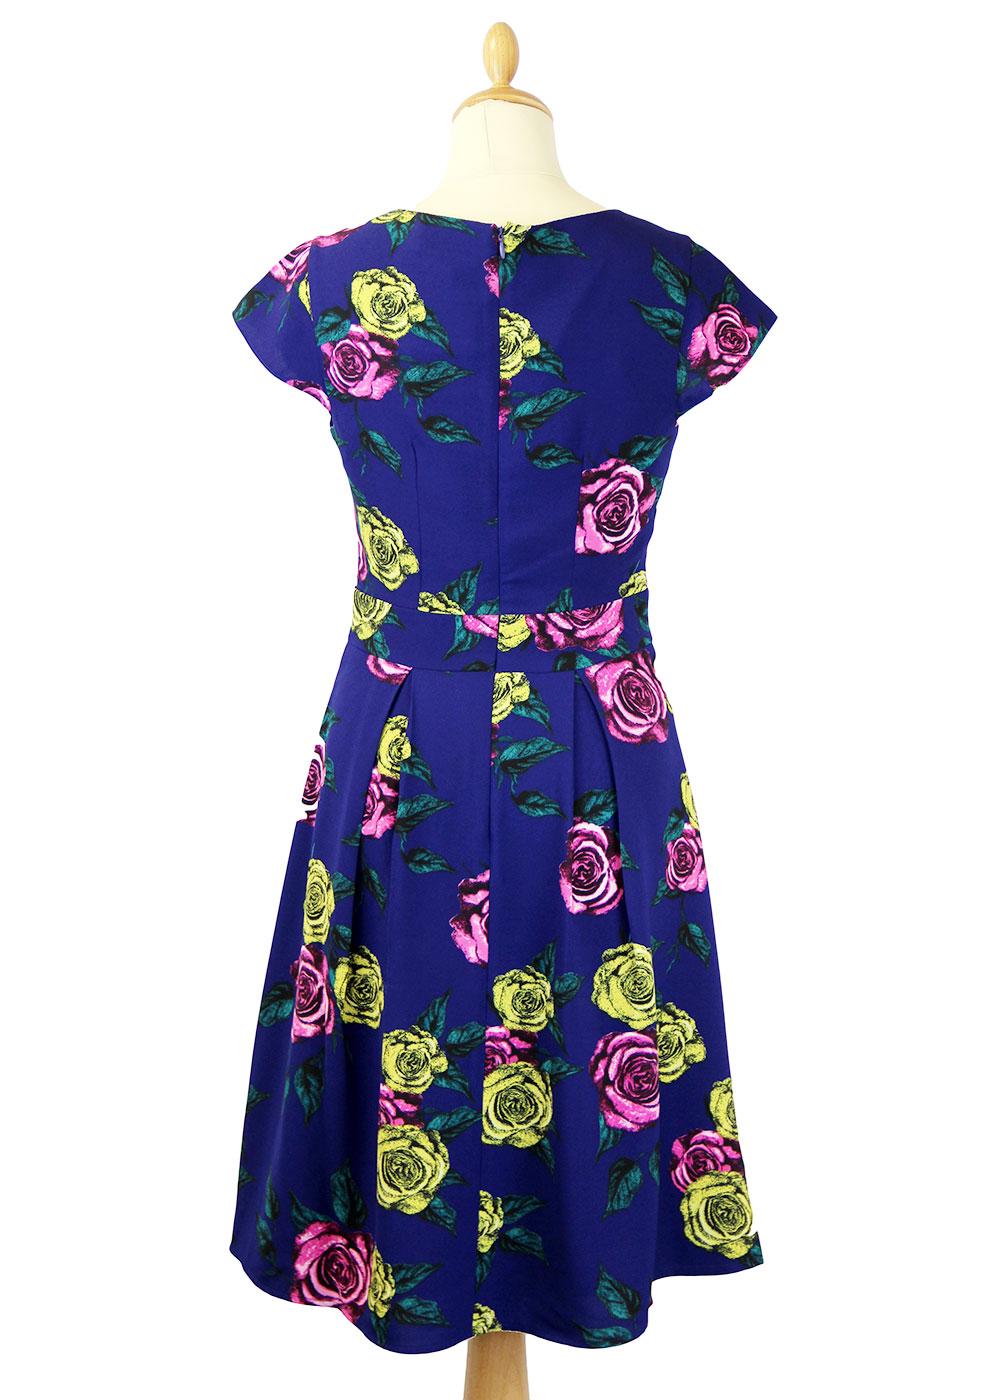 DARLING Talia Retro 60s Floral Vintage Style Tea Dress in Shadow